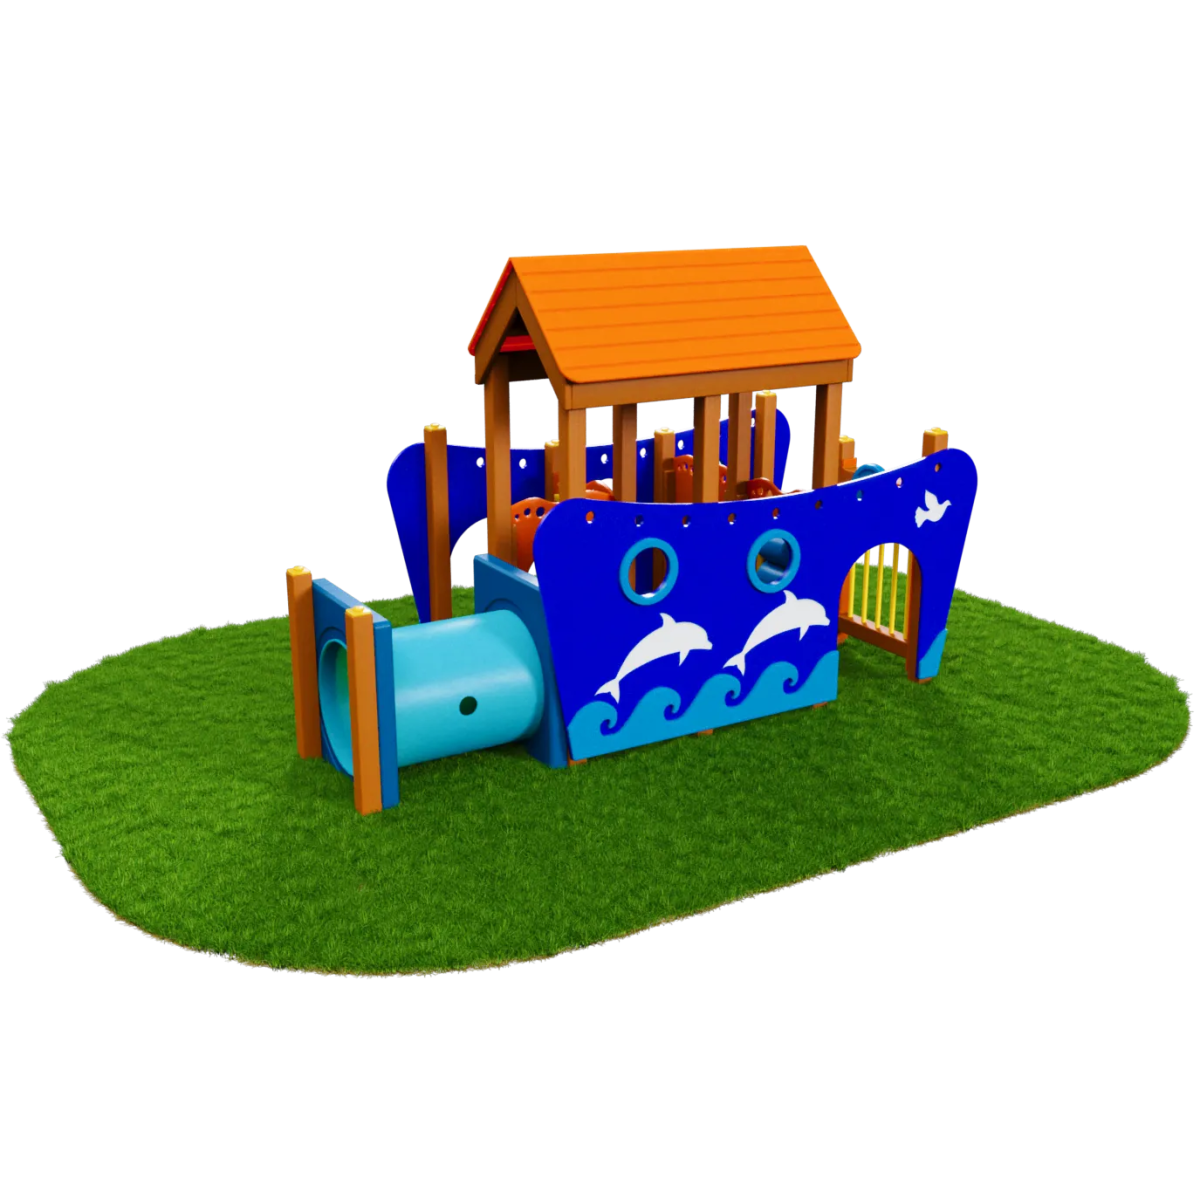 Seaside Playset - Toddler Playgrounds - Playtopia, Inc.